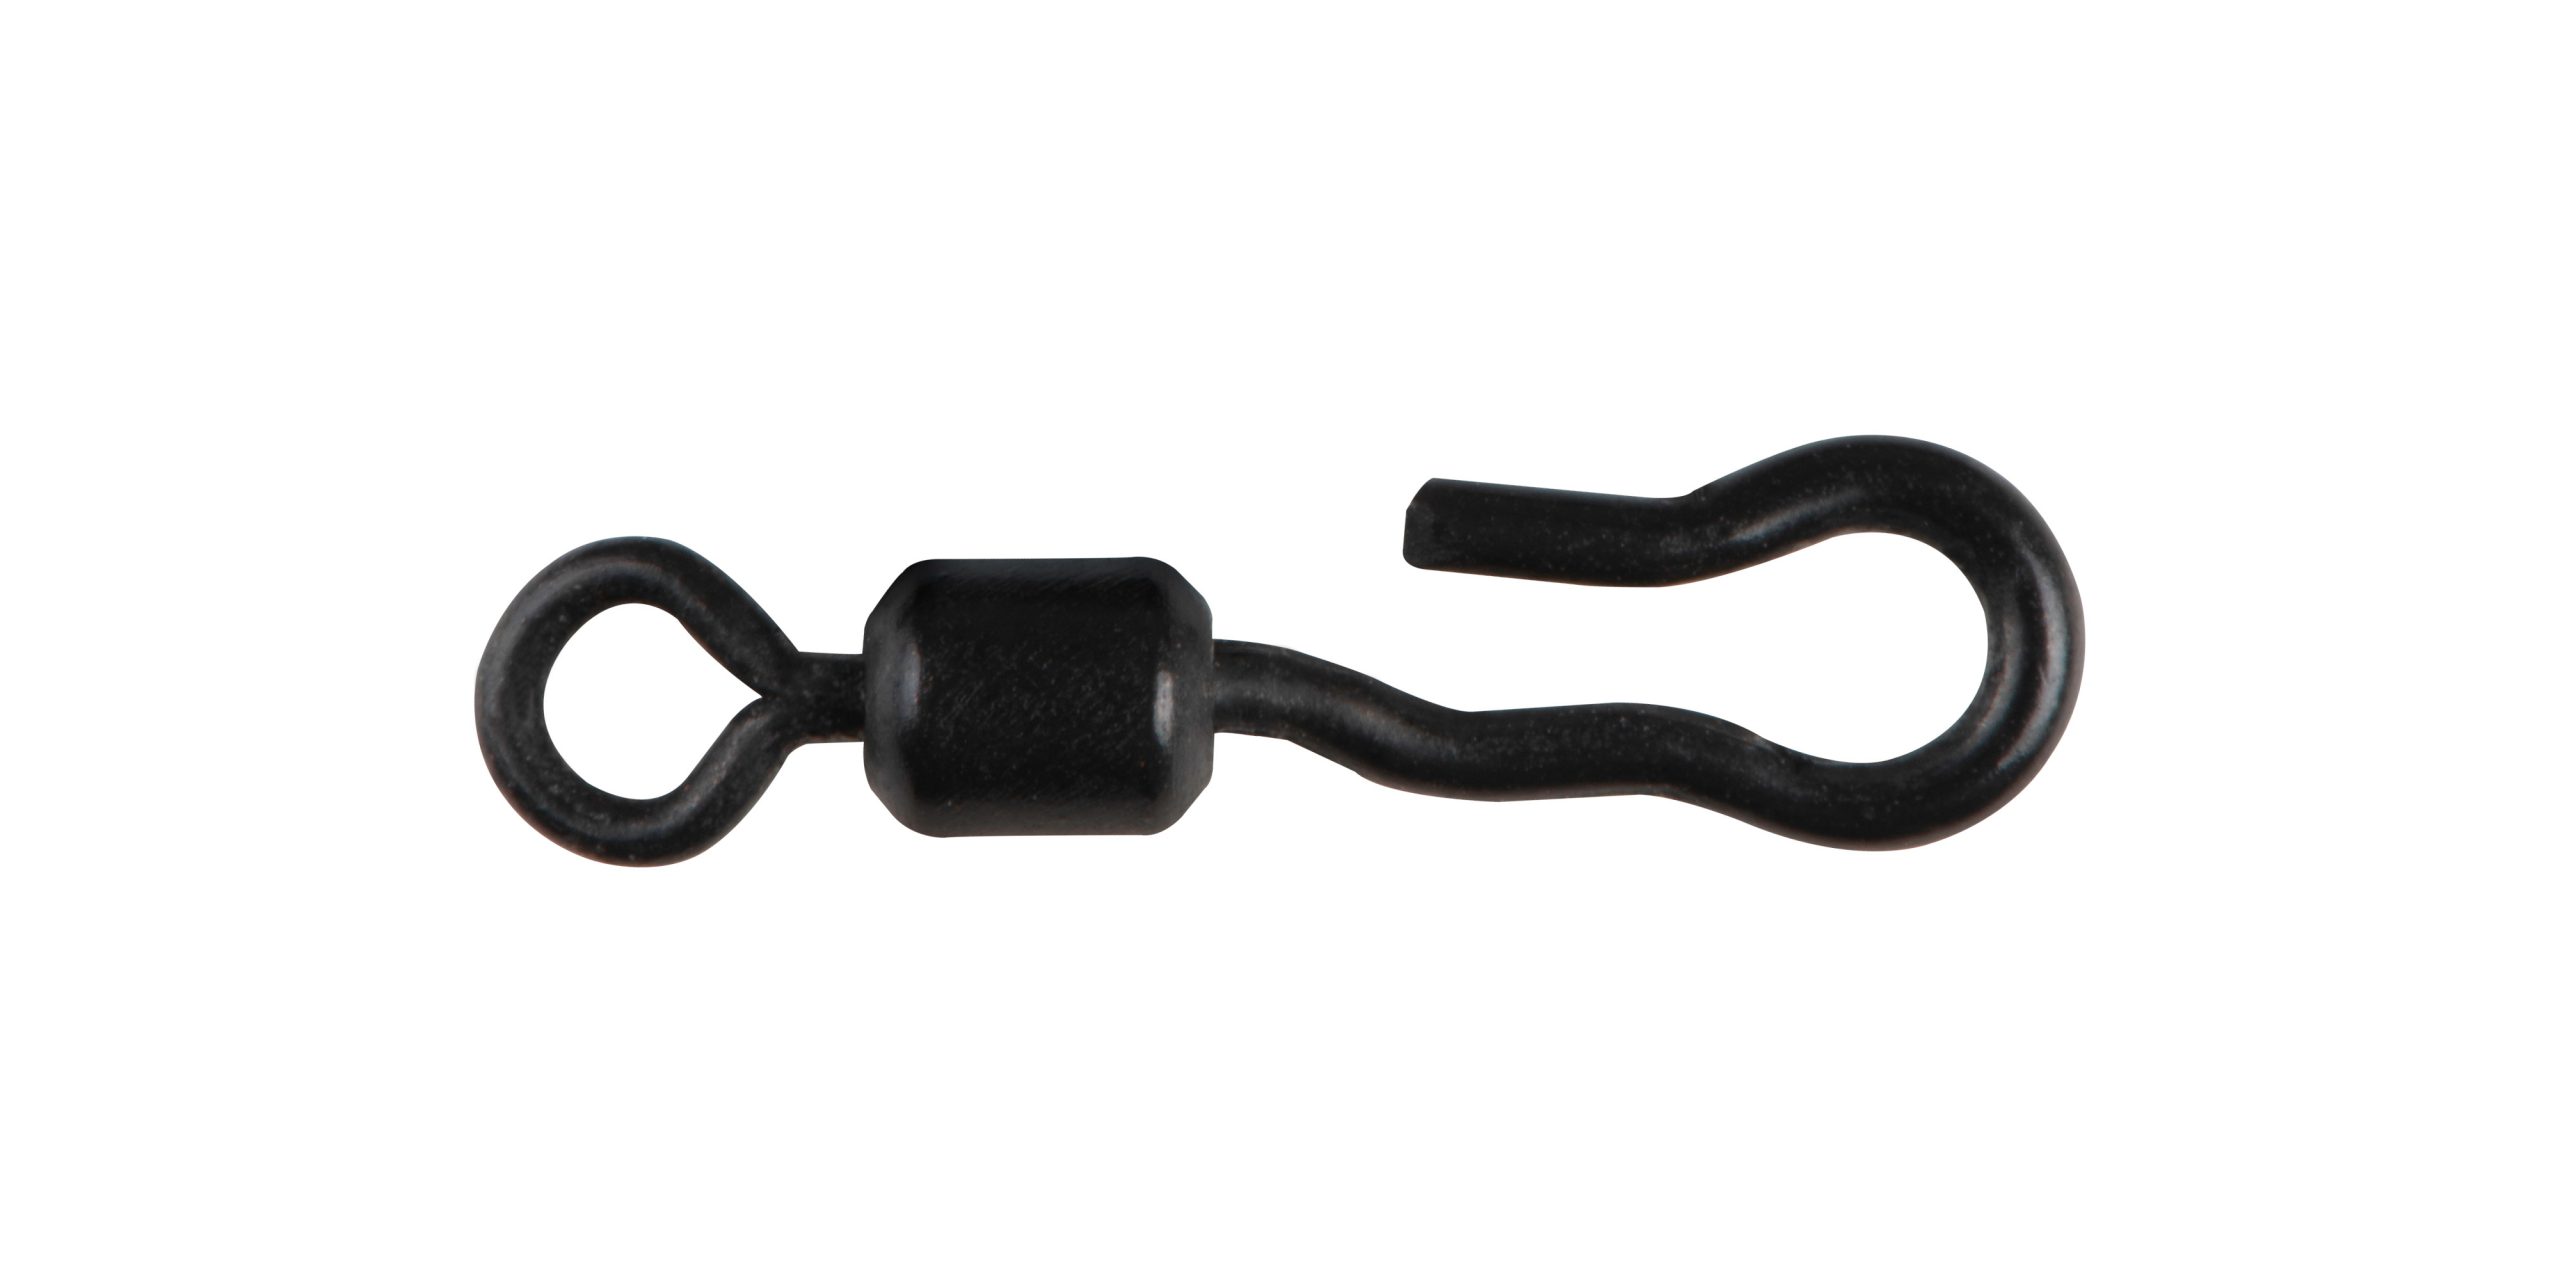 Fox EDGES™ Kwik Change Mini Hook Swivel EDGES™ Rig Accessories